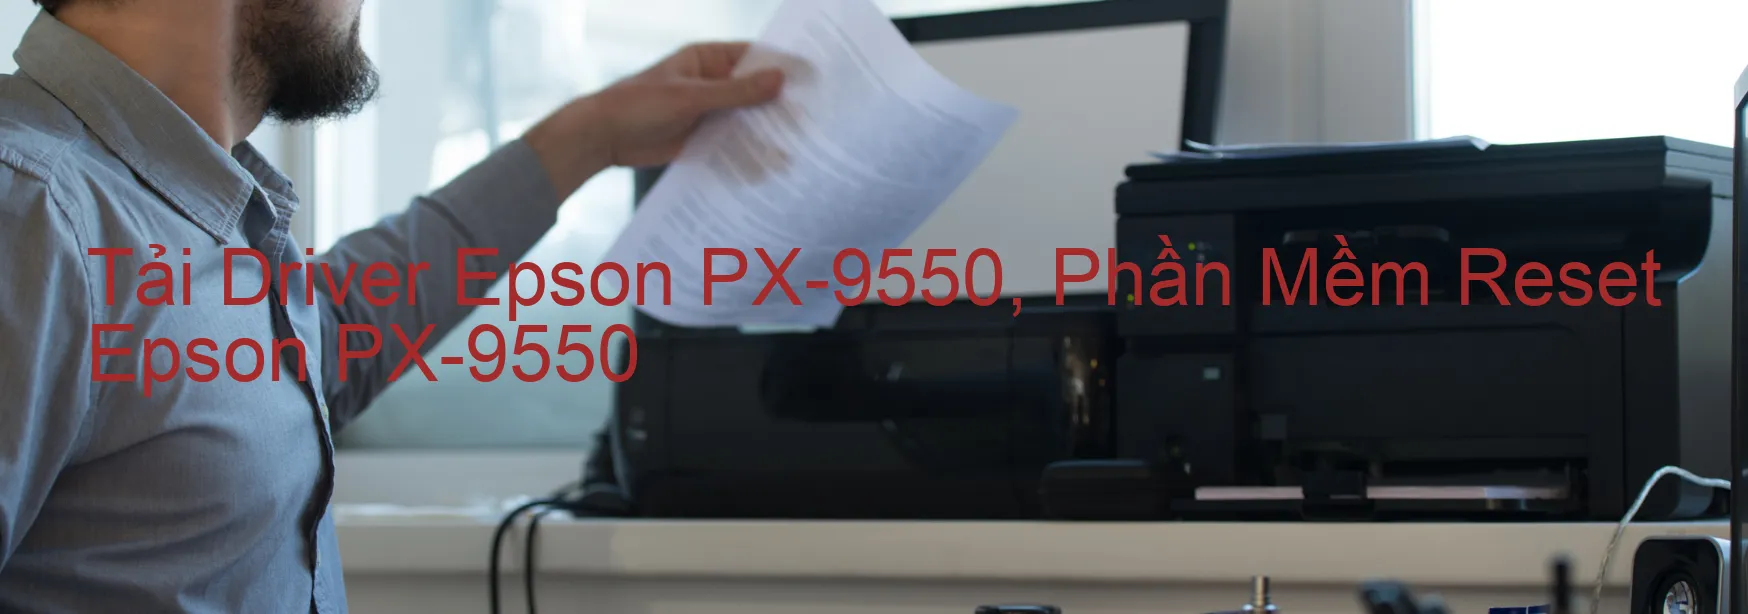 Driver Epson PX-9550, Phần Mềm Reset Epson PX-9550